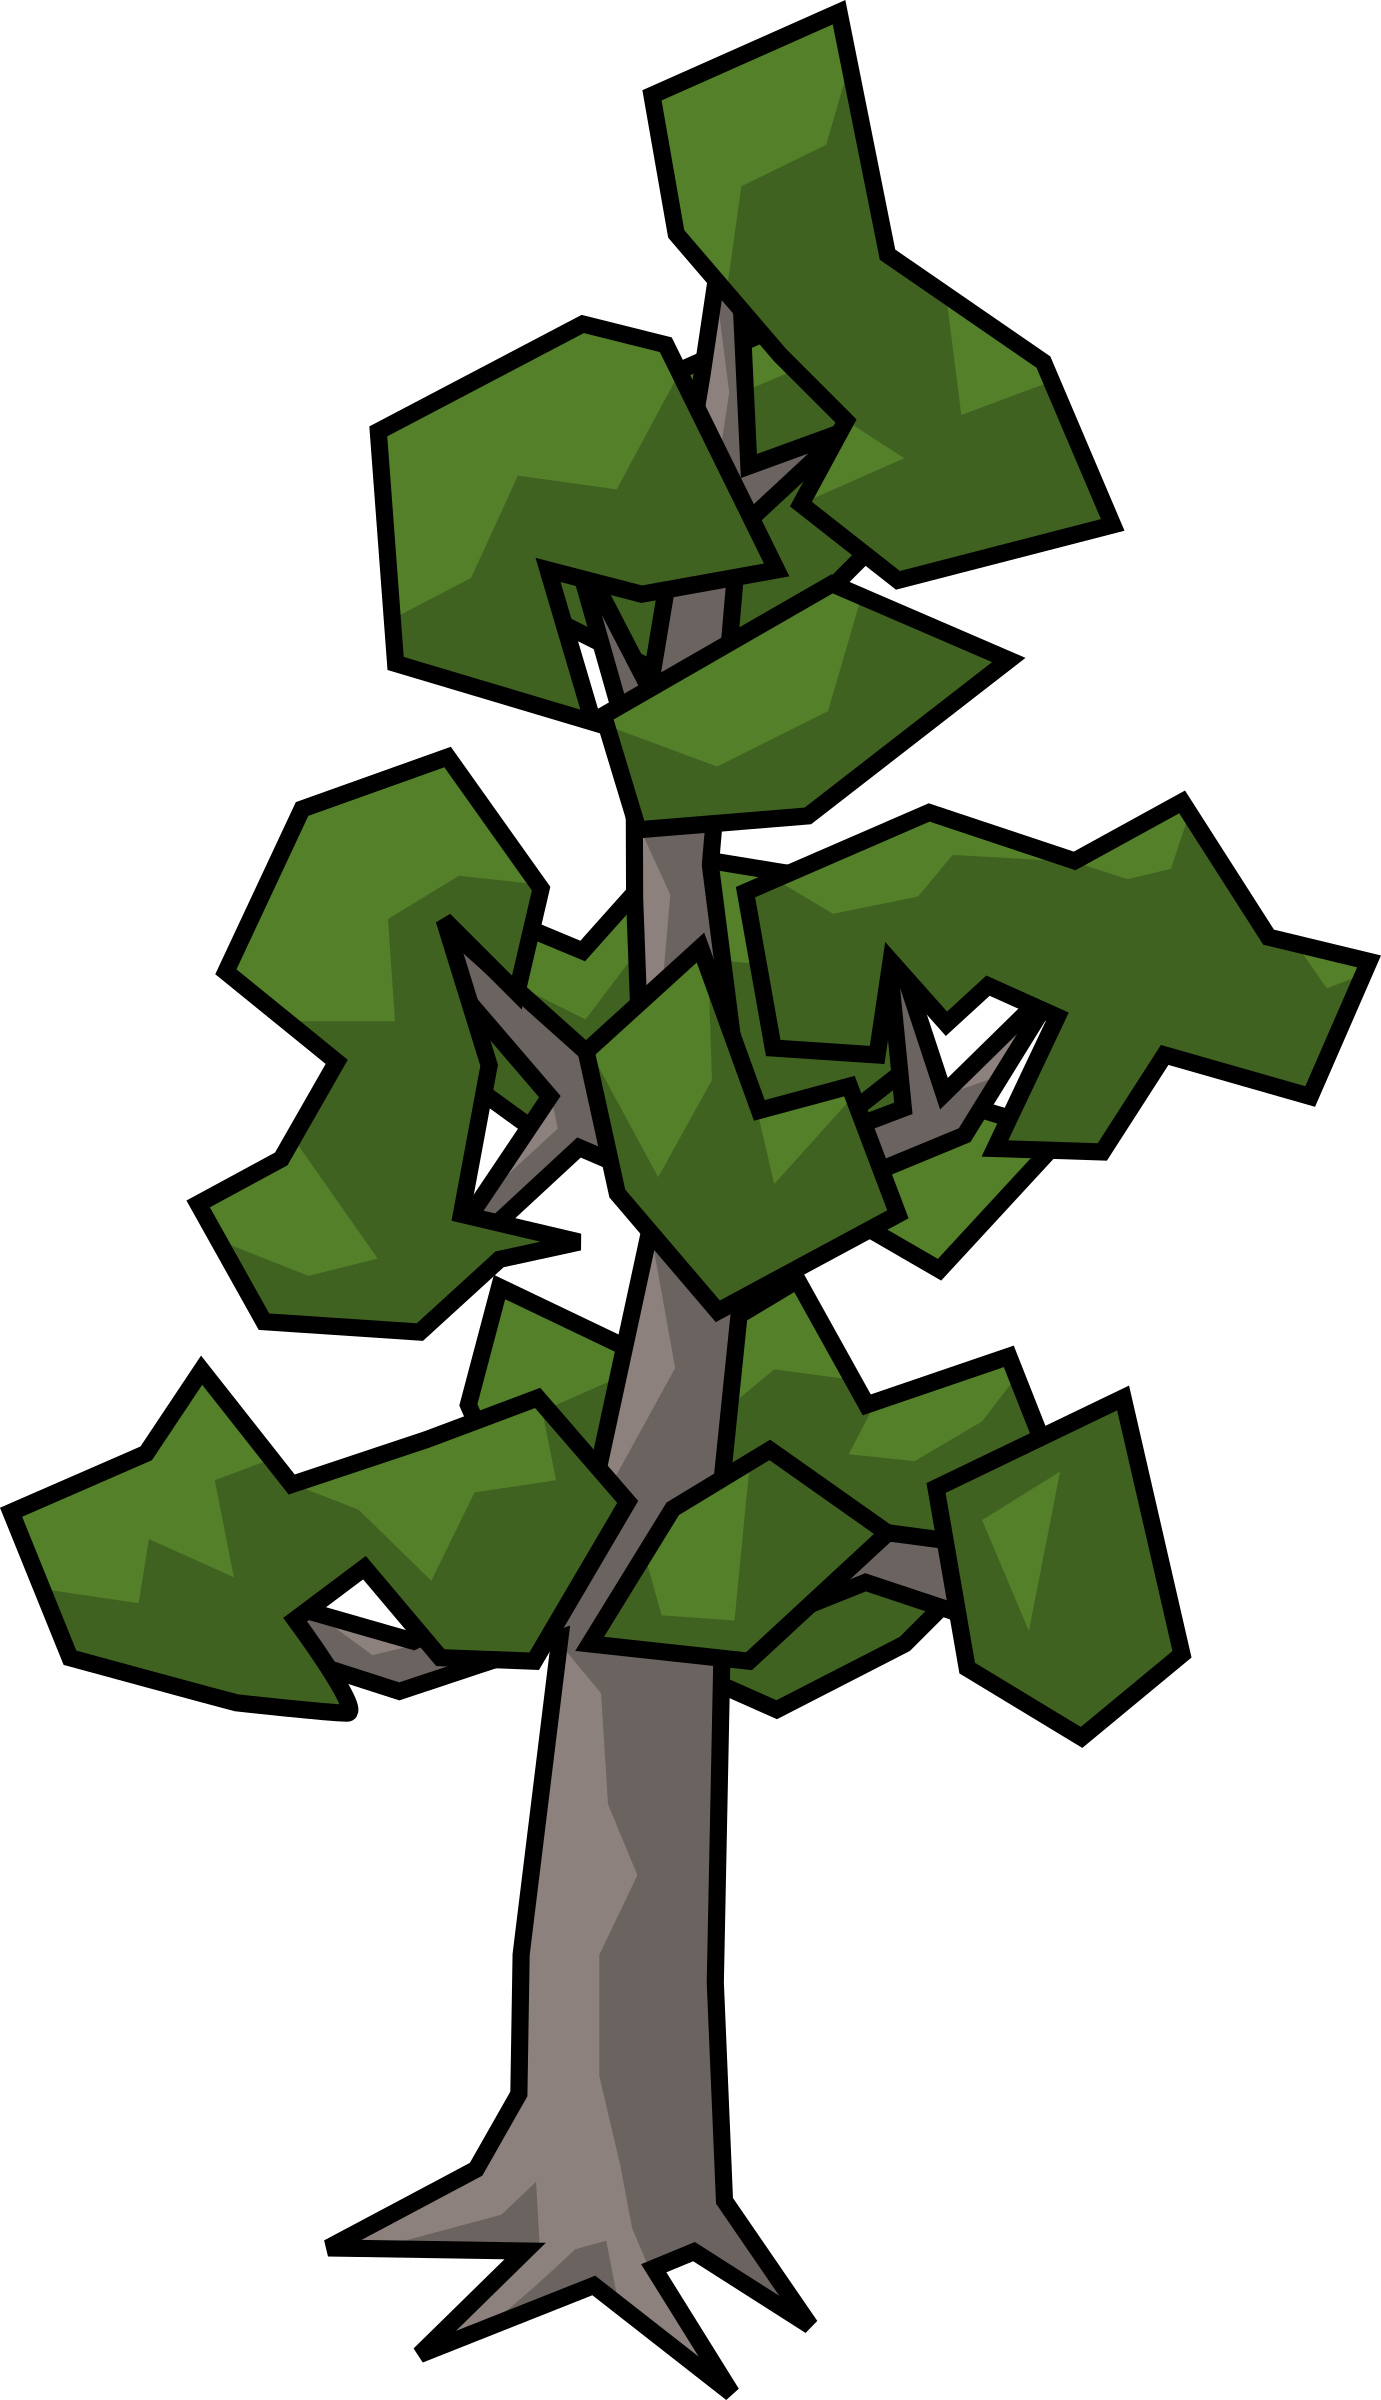 Pine Tree - Cel Shading Trees (1381x2400)